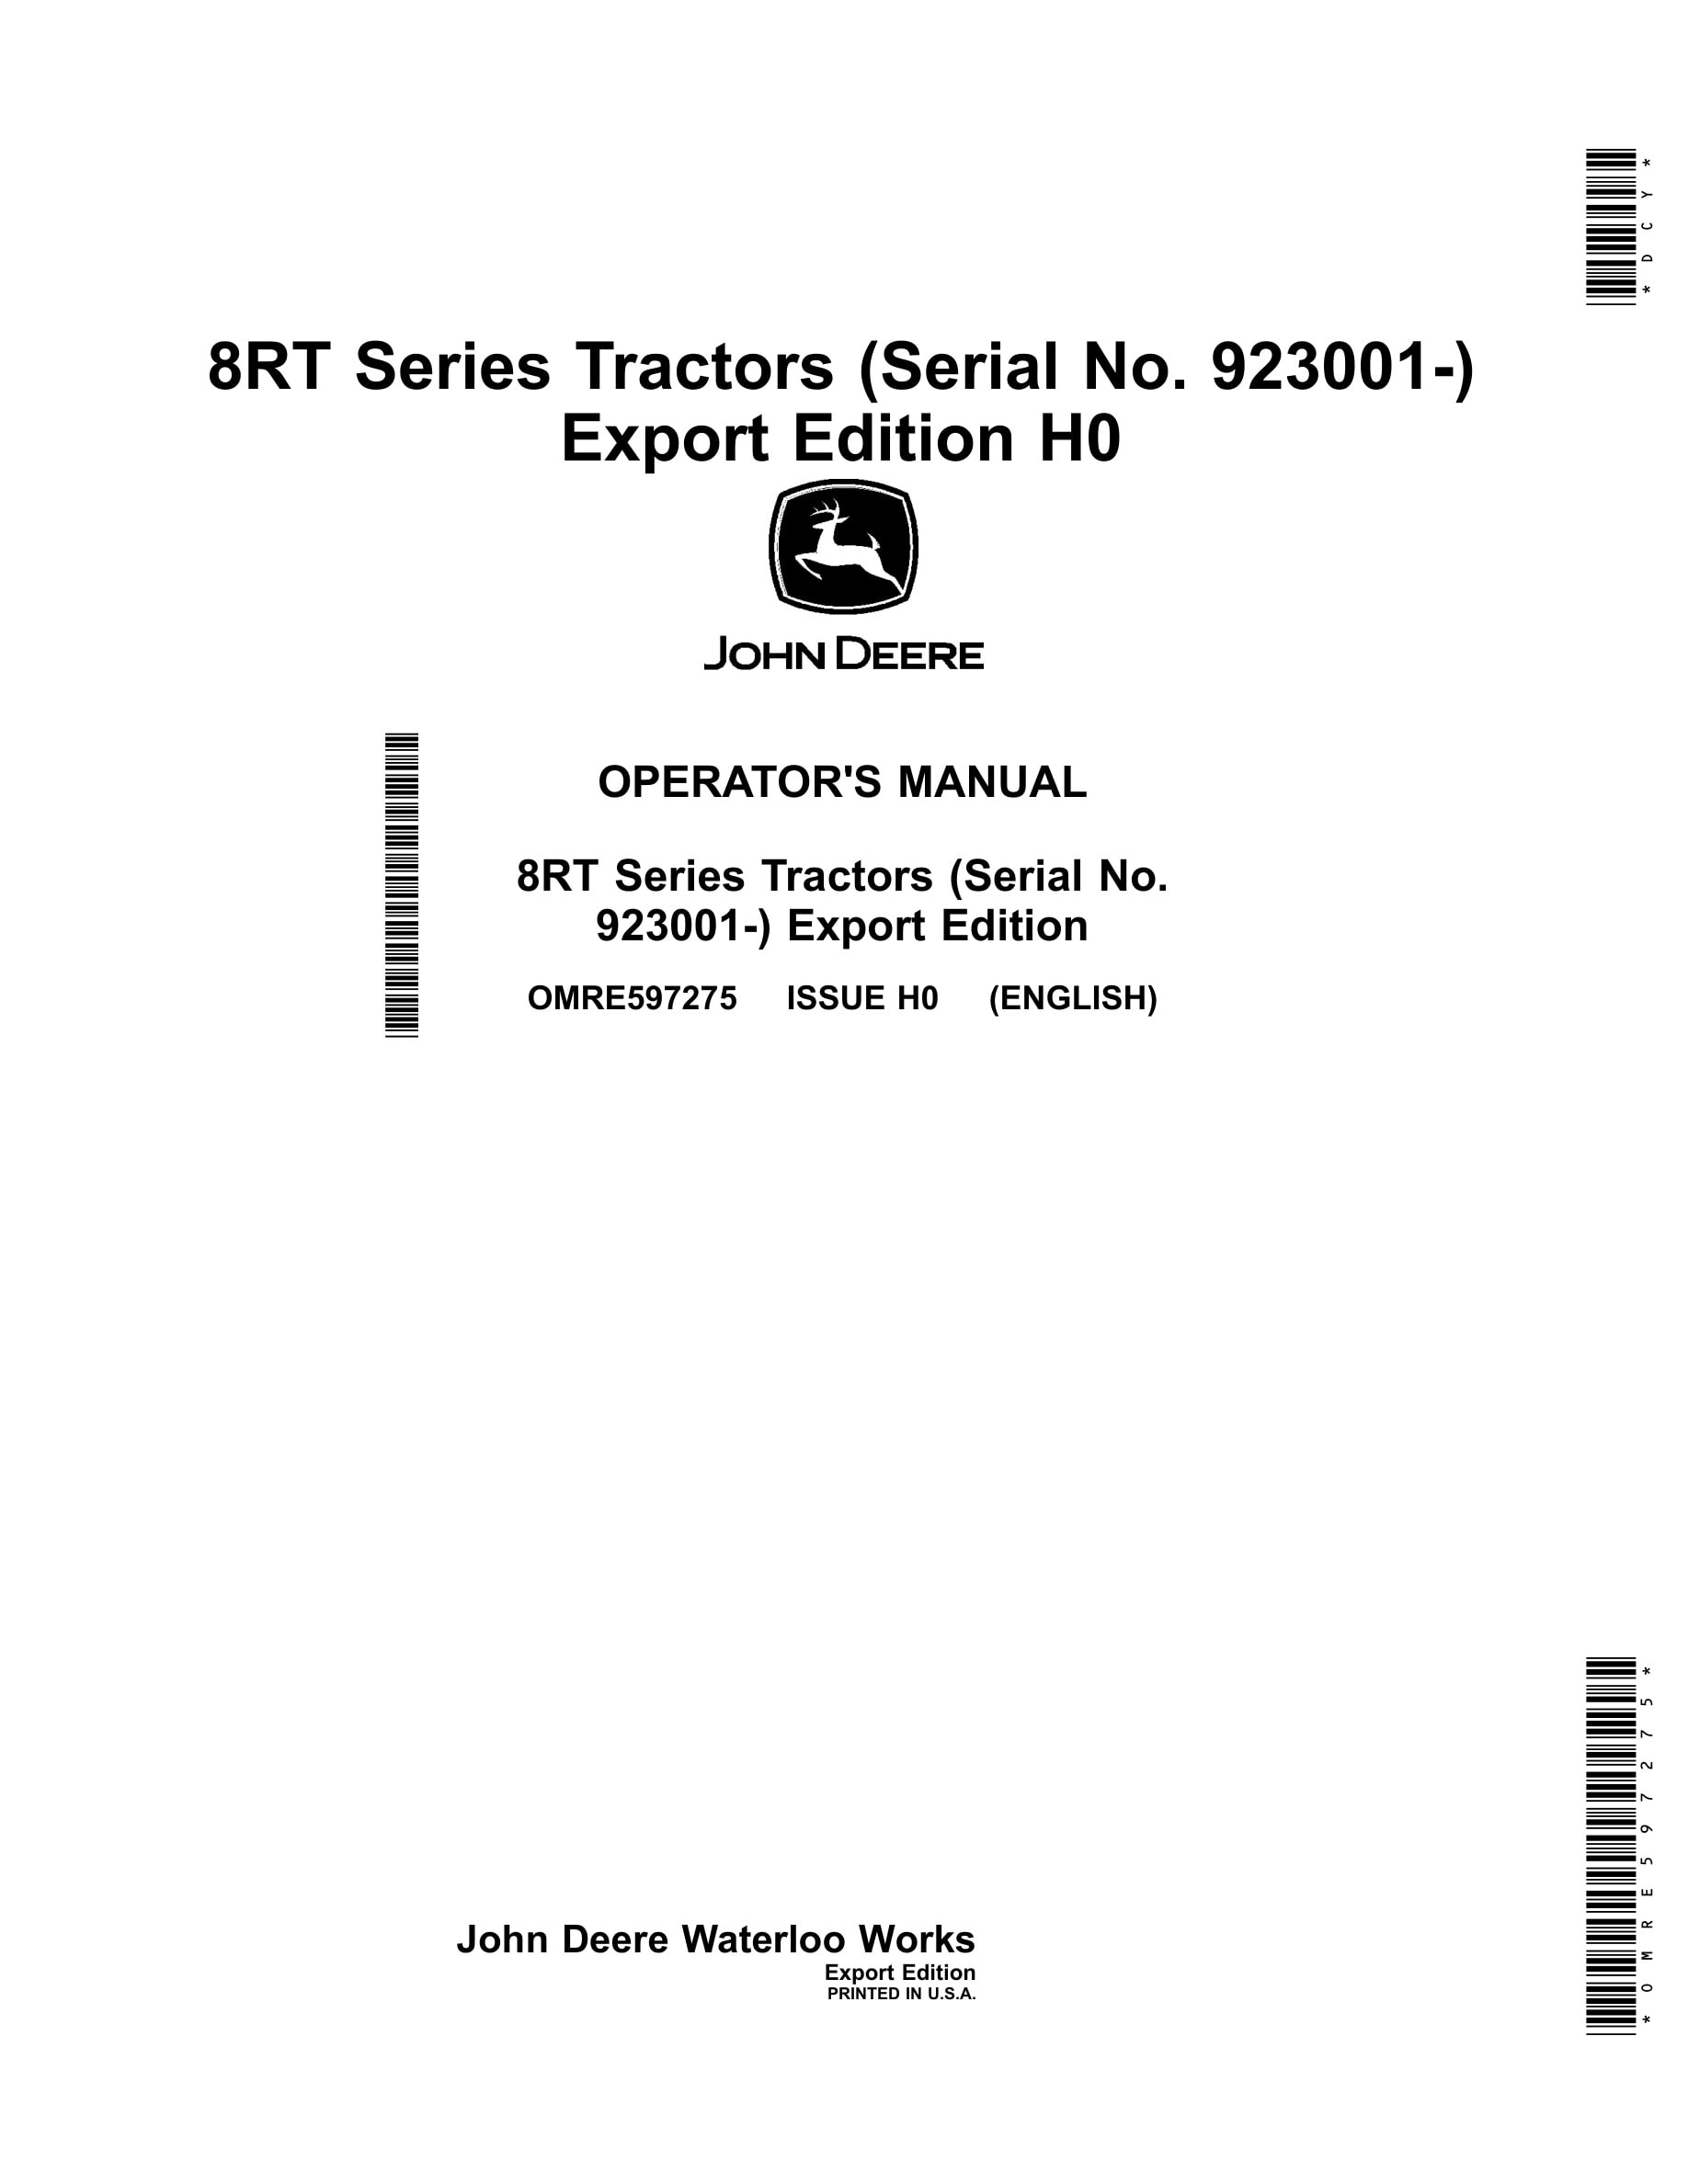 John Deere 8rt Series Tractors Operator Manuals OMRE597275-1